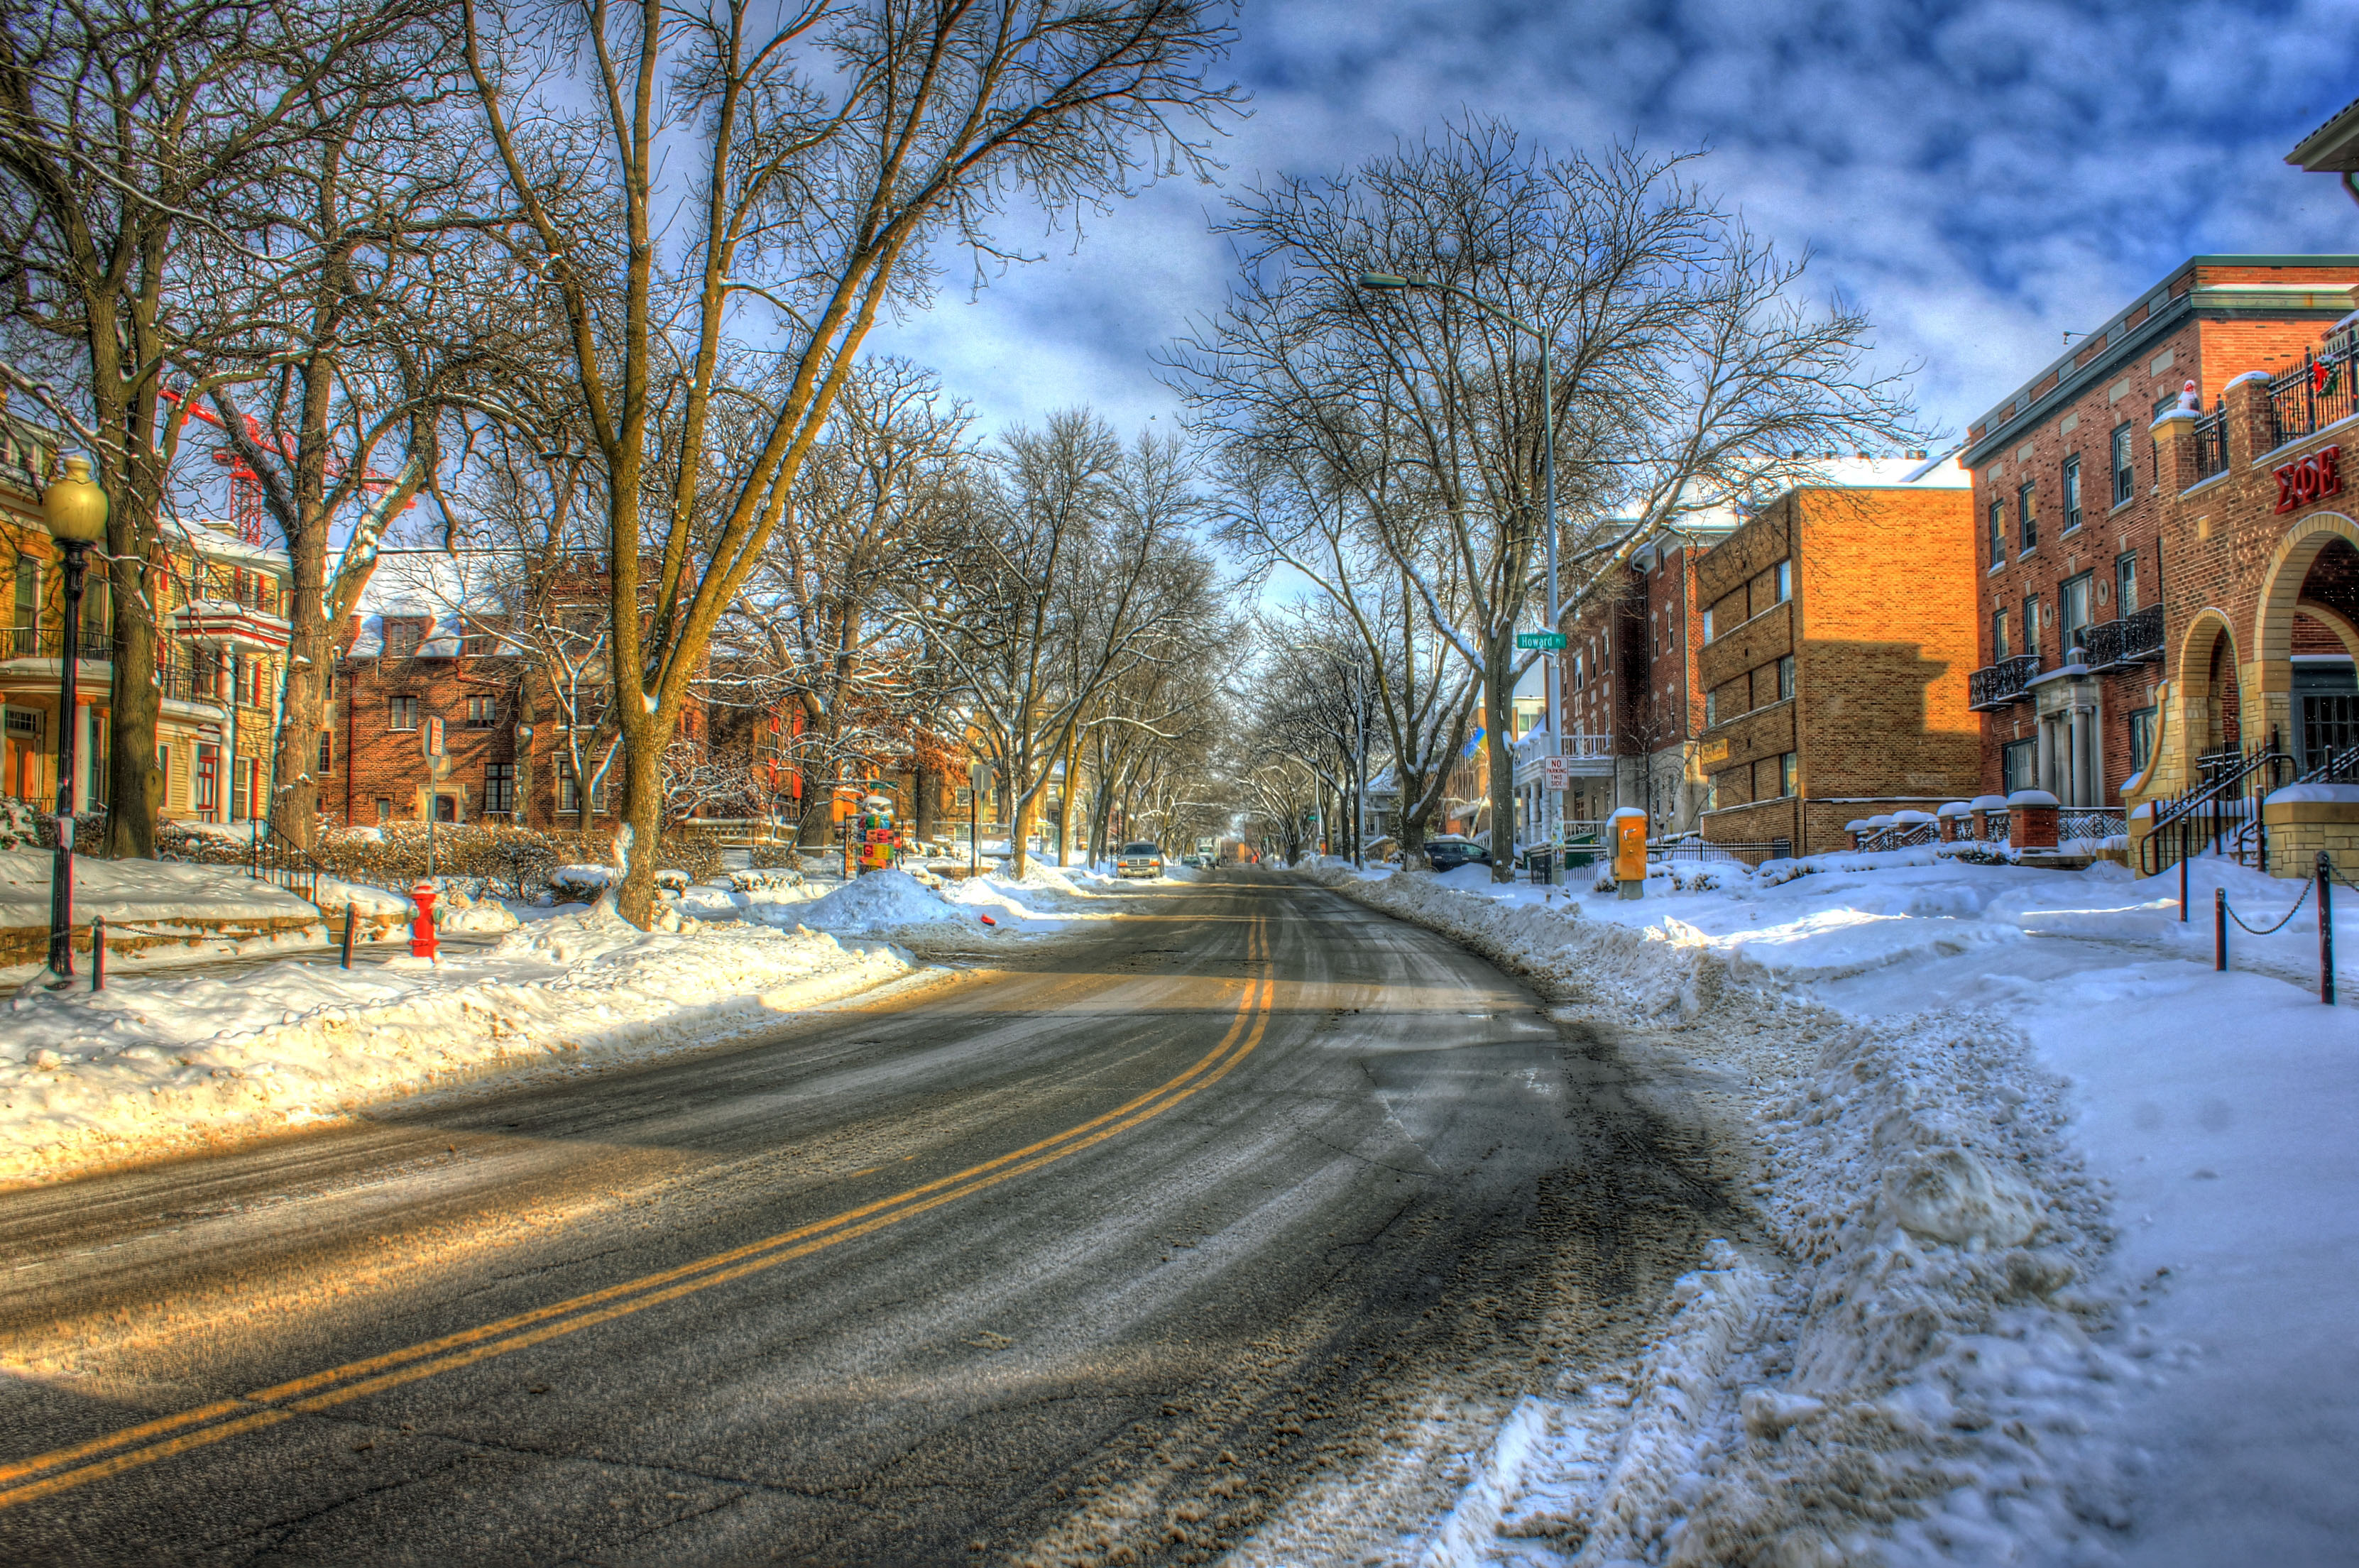 Snowy street in Madison, Wisconsin image - Free stock photo - Public ...